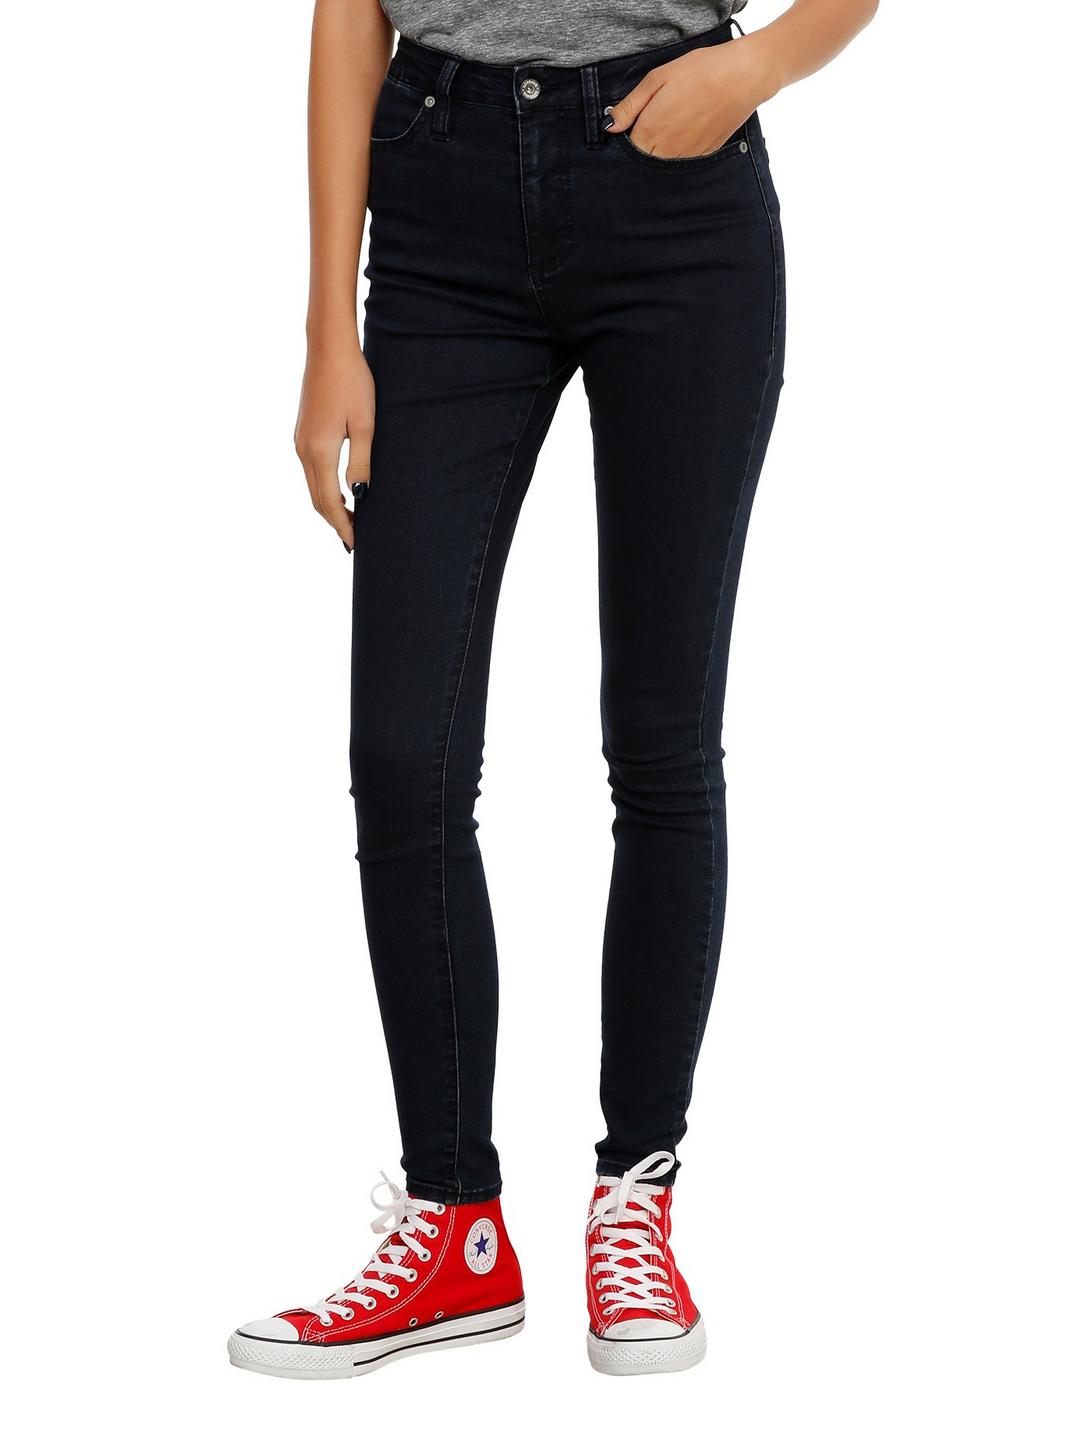 LOVEsick Indigo High-Waist Super Skinny Jeans, BLACK, hi-res